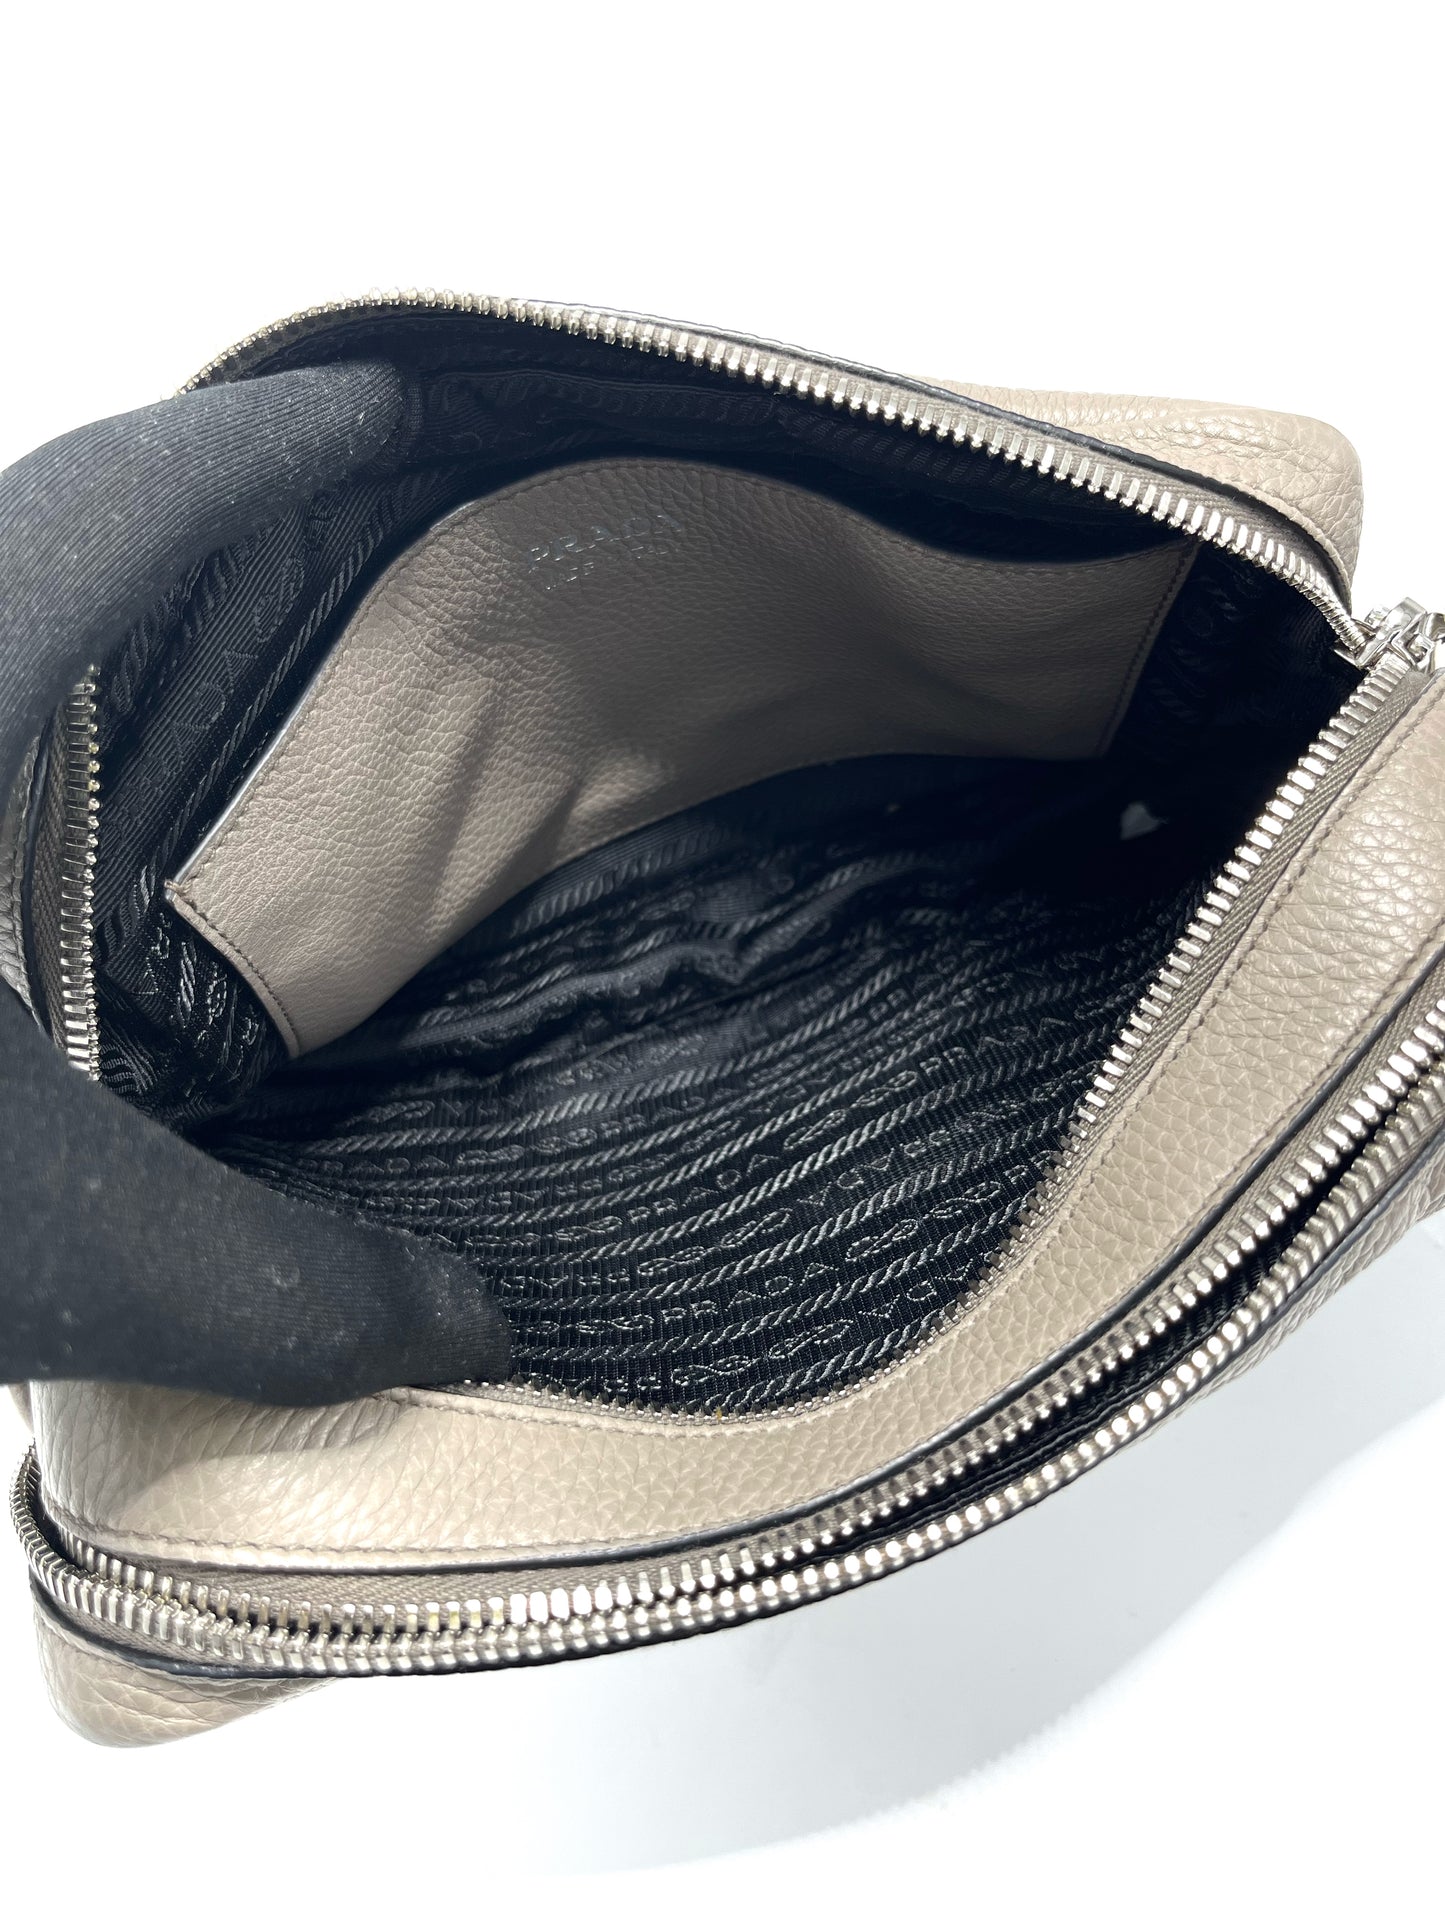 Bandolera Prada shoulder bag